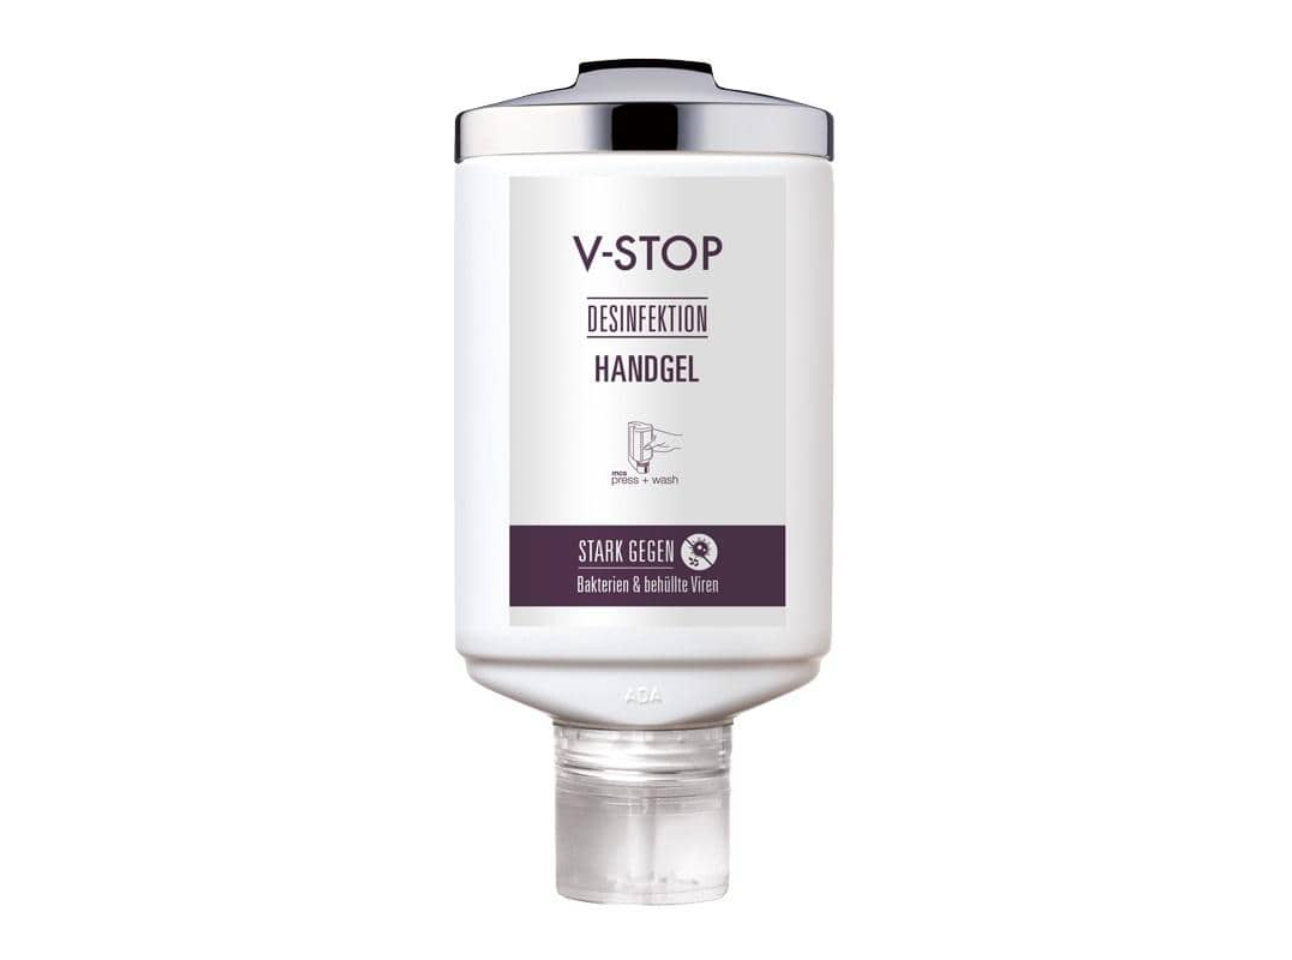 V-STOP - Händedesinfektionsgel, 330 ml press + wash